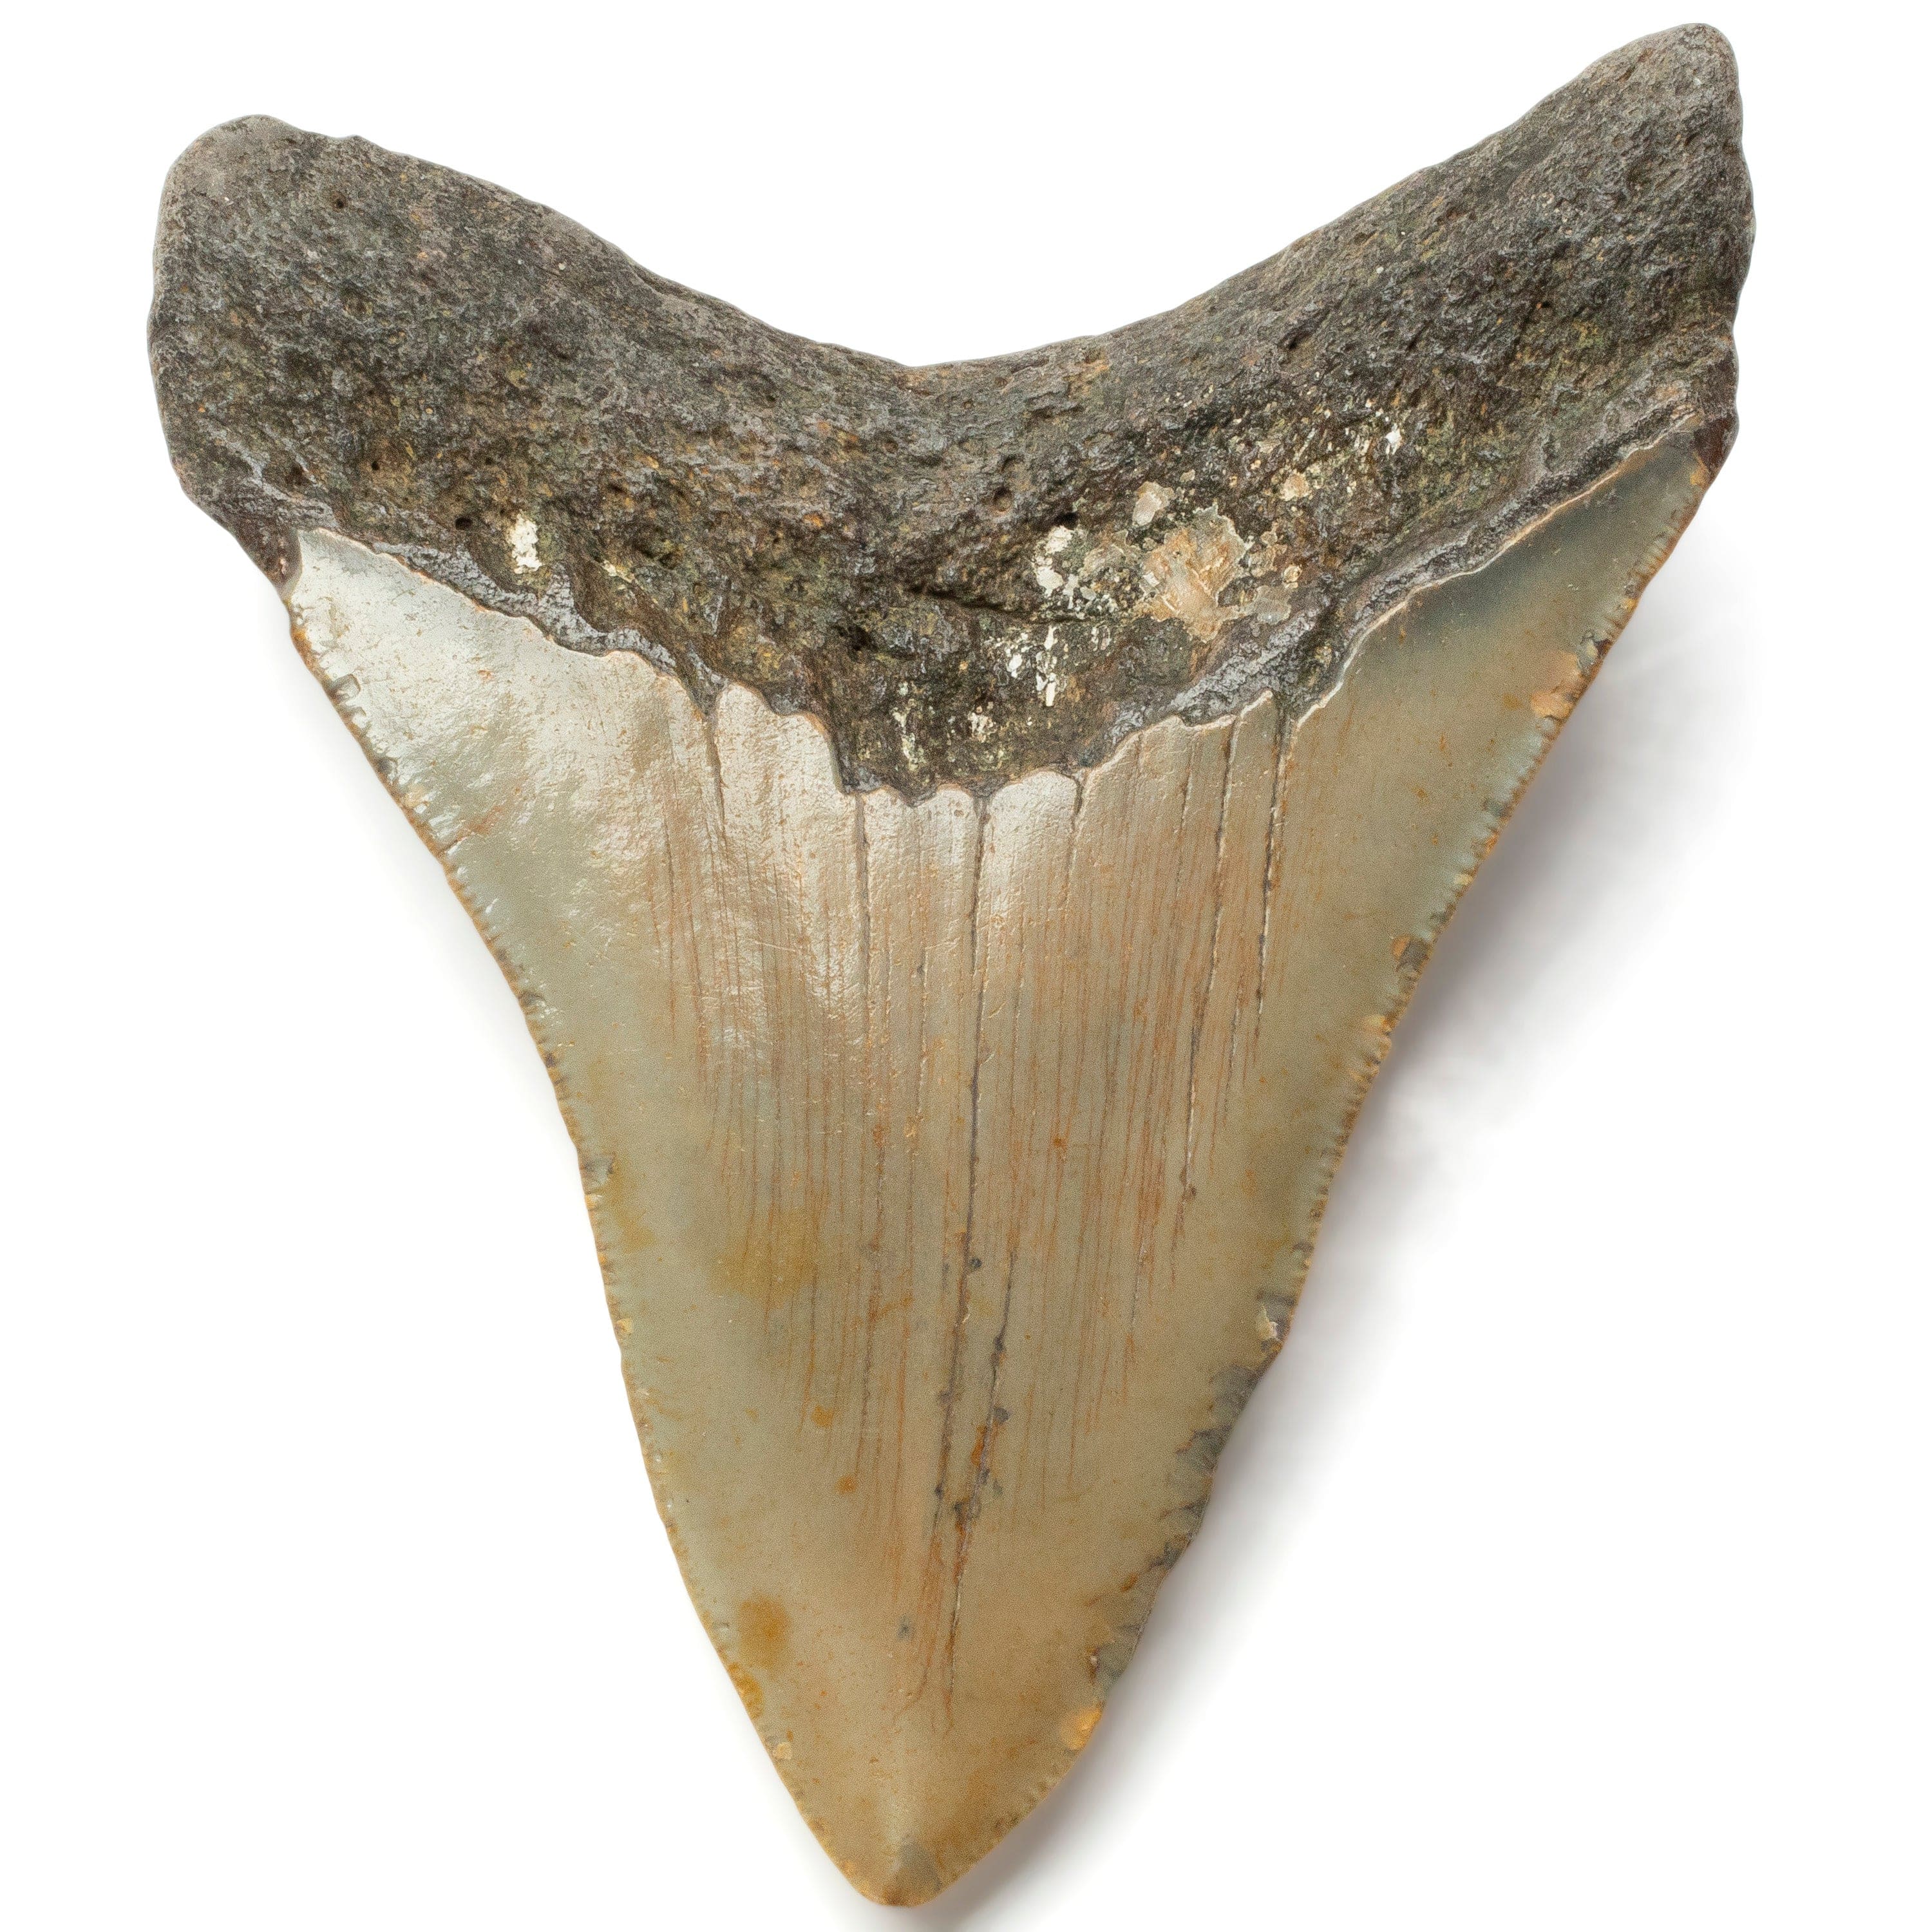 Kalifano Megalodon Teeth Megalodon Tooth from South Carolina - 4.1" ST1600.035